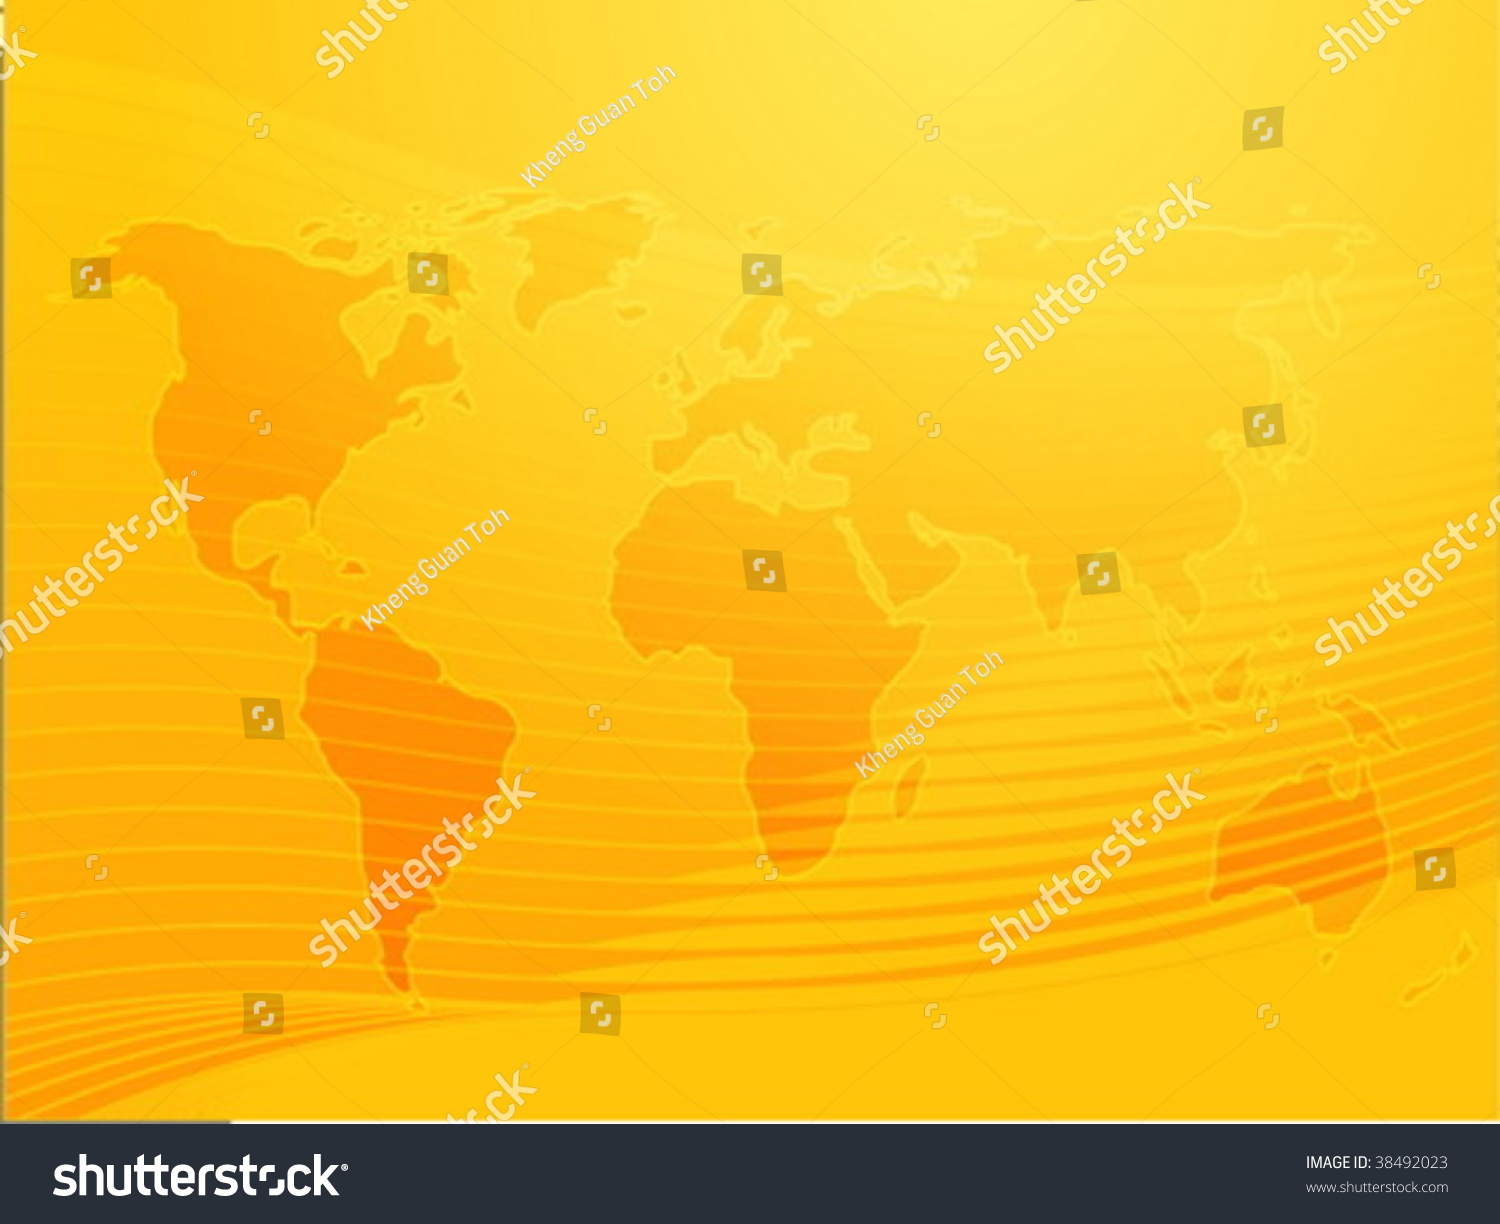 Map Of The World Illustration With Wavy Royalty Free Stock Vector Avopix Com